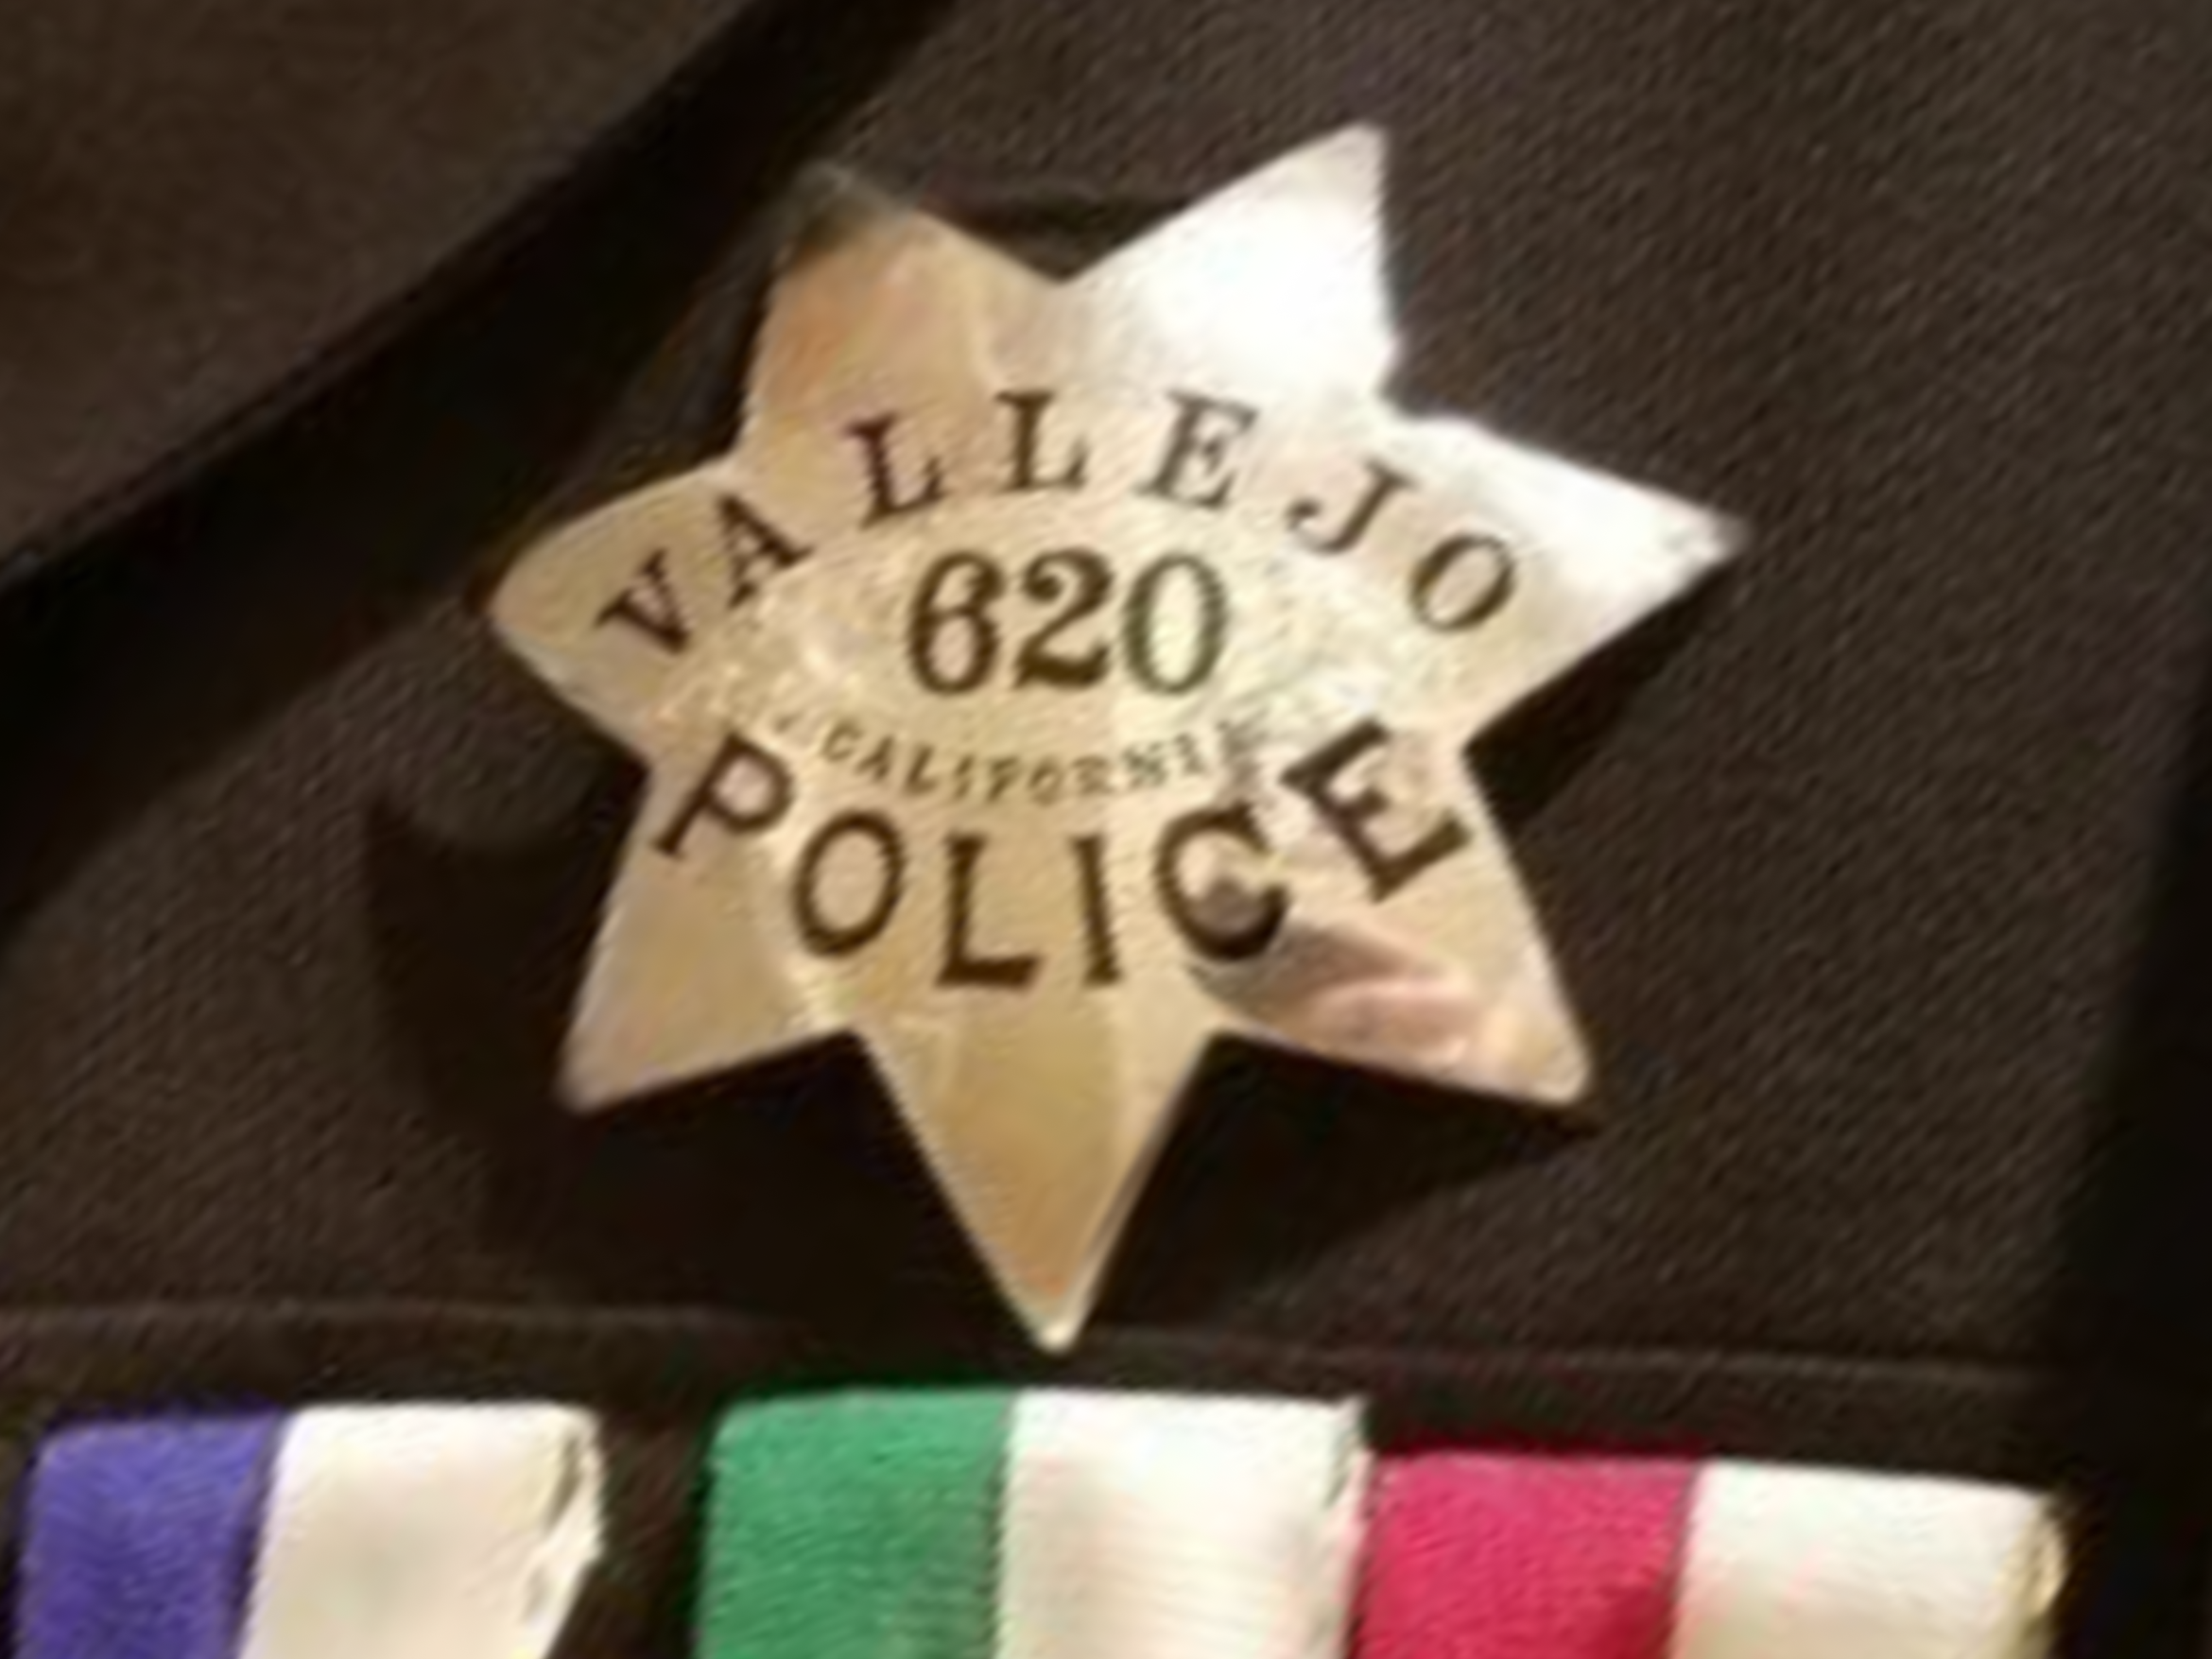 Vallejo Police Bend Badges To Mark Fatal Shootings